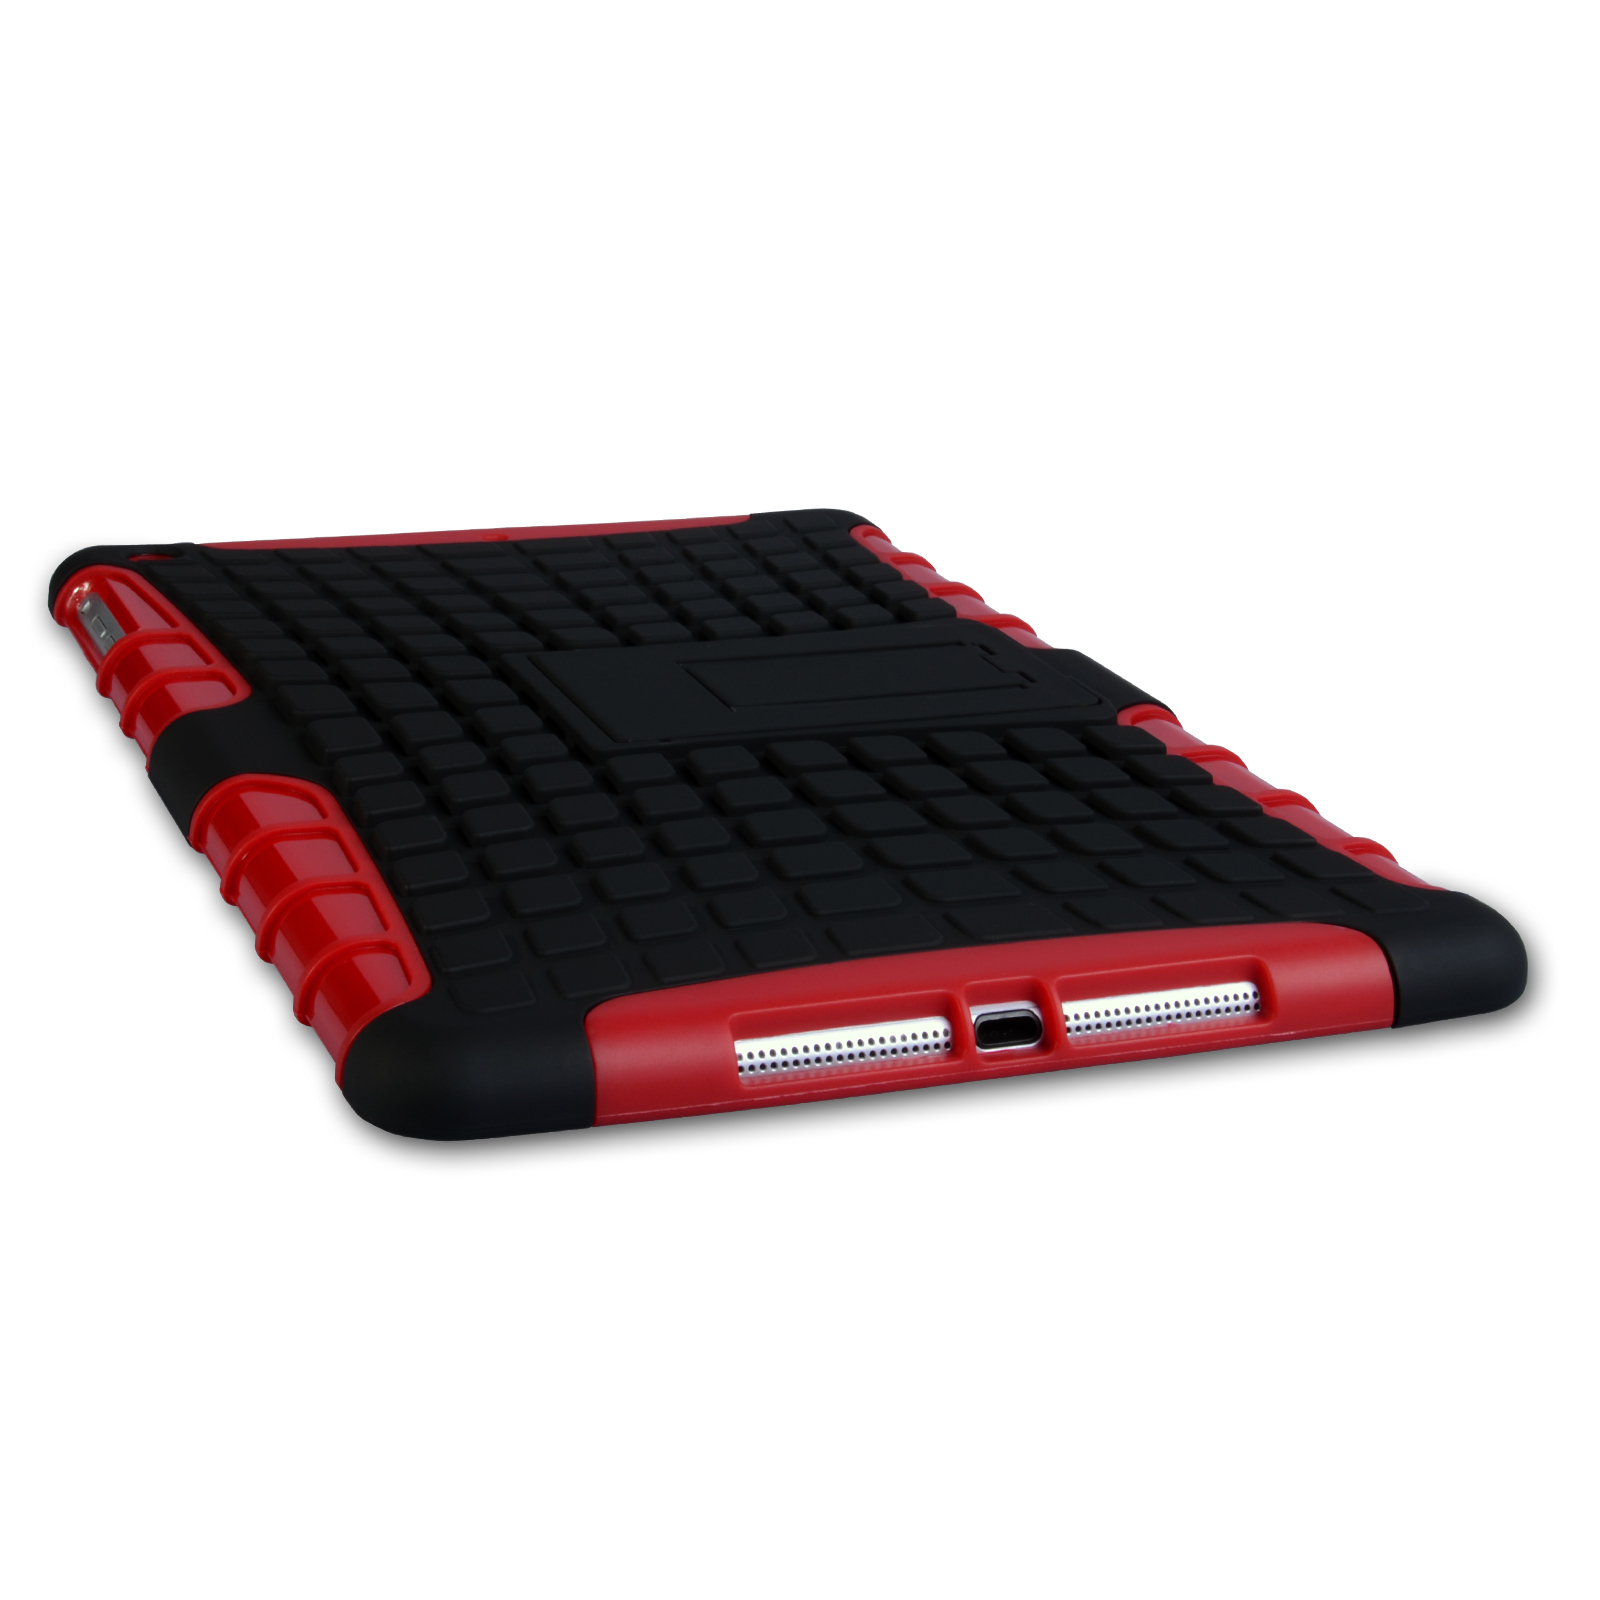 Caseflex iPad 2, 3, 4 Tough Stand Cover - Red